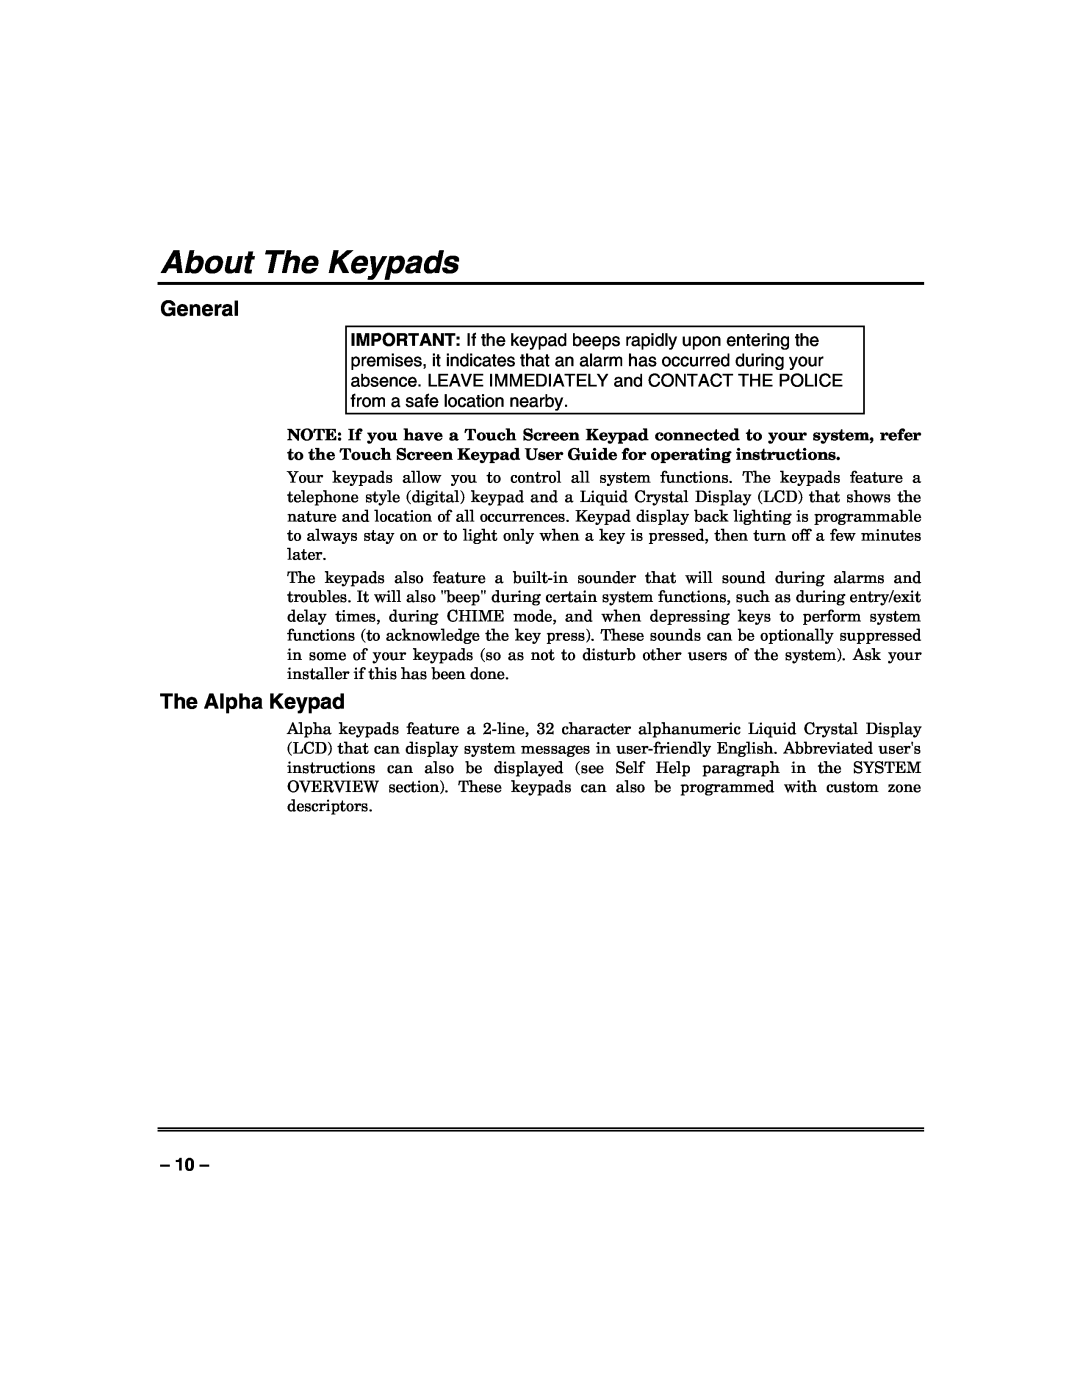 Honeywell VISTA128BPT, VISTA250BPT, 128BPTSIA manual About The Keypads, The Alpha Keypad, General 